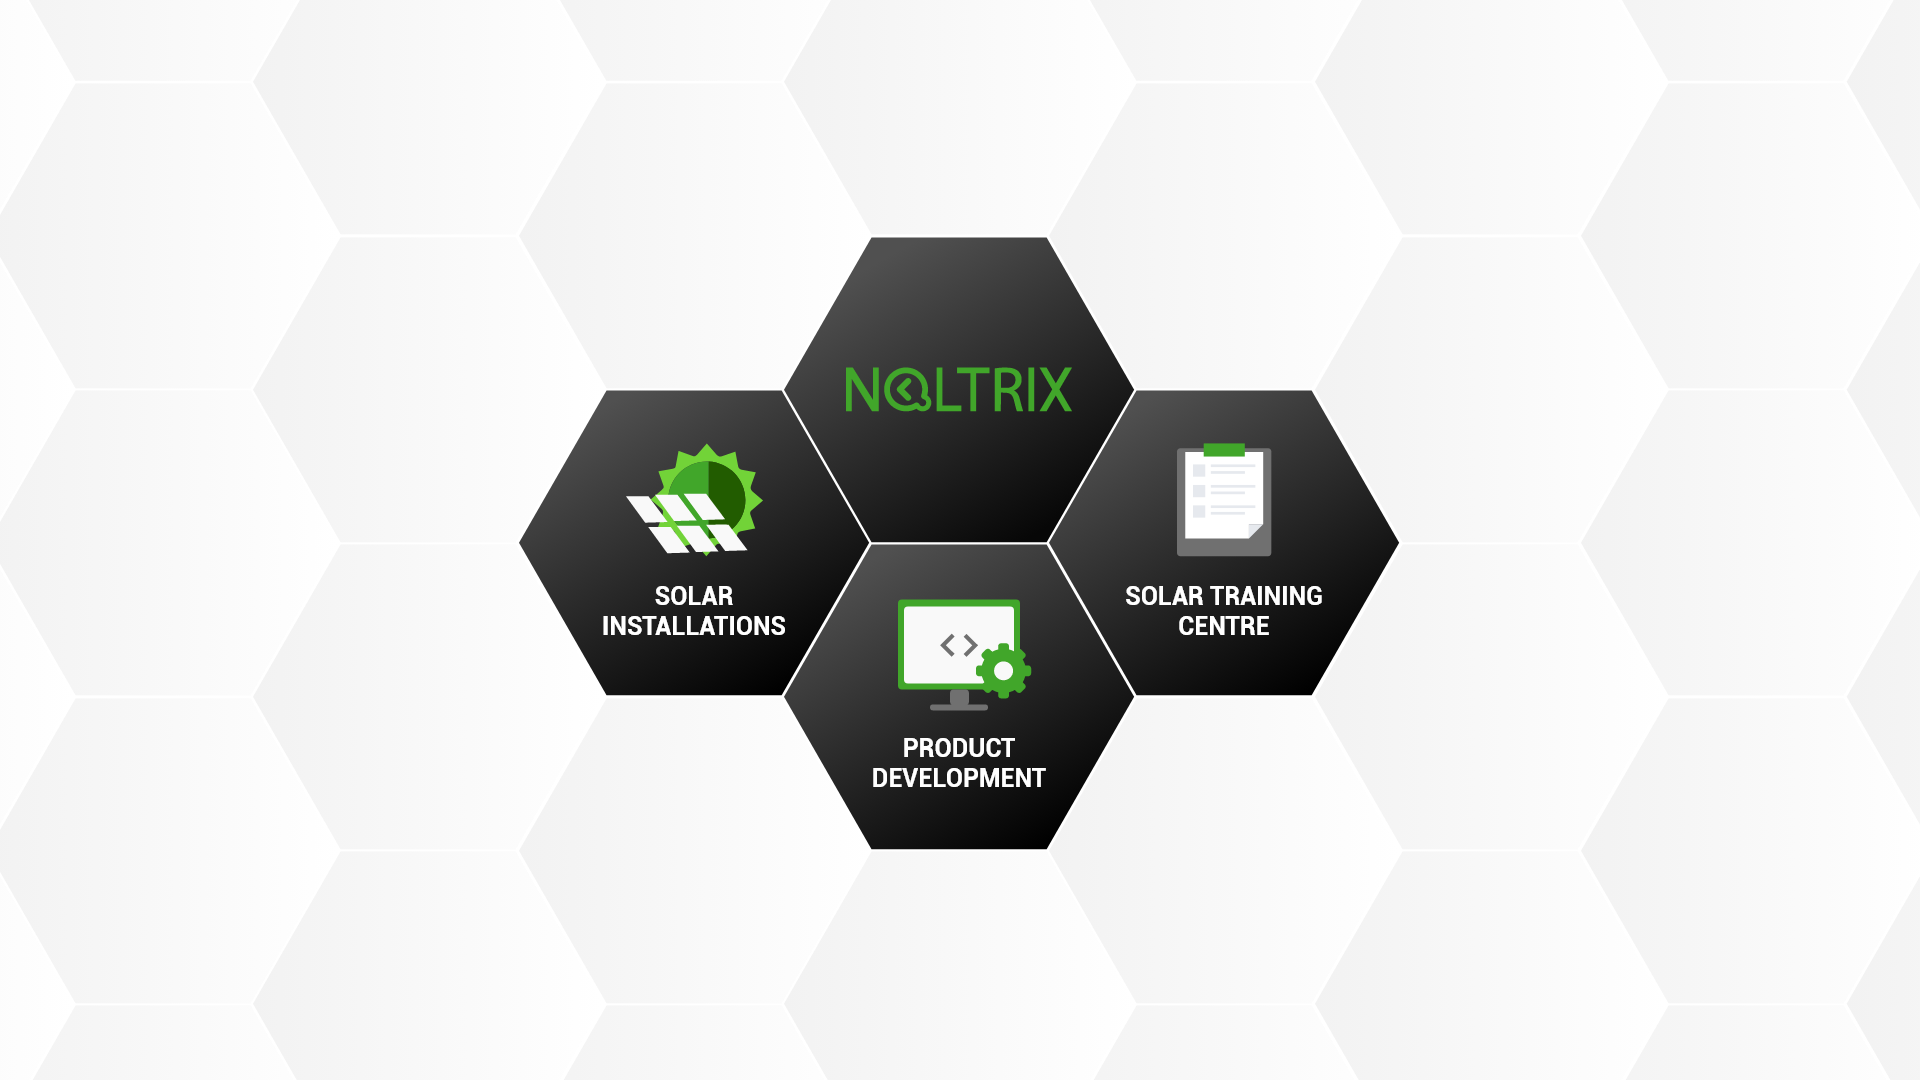 Noltrix Background Image